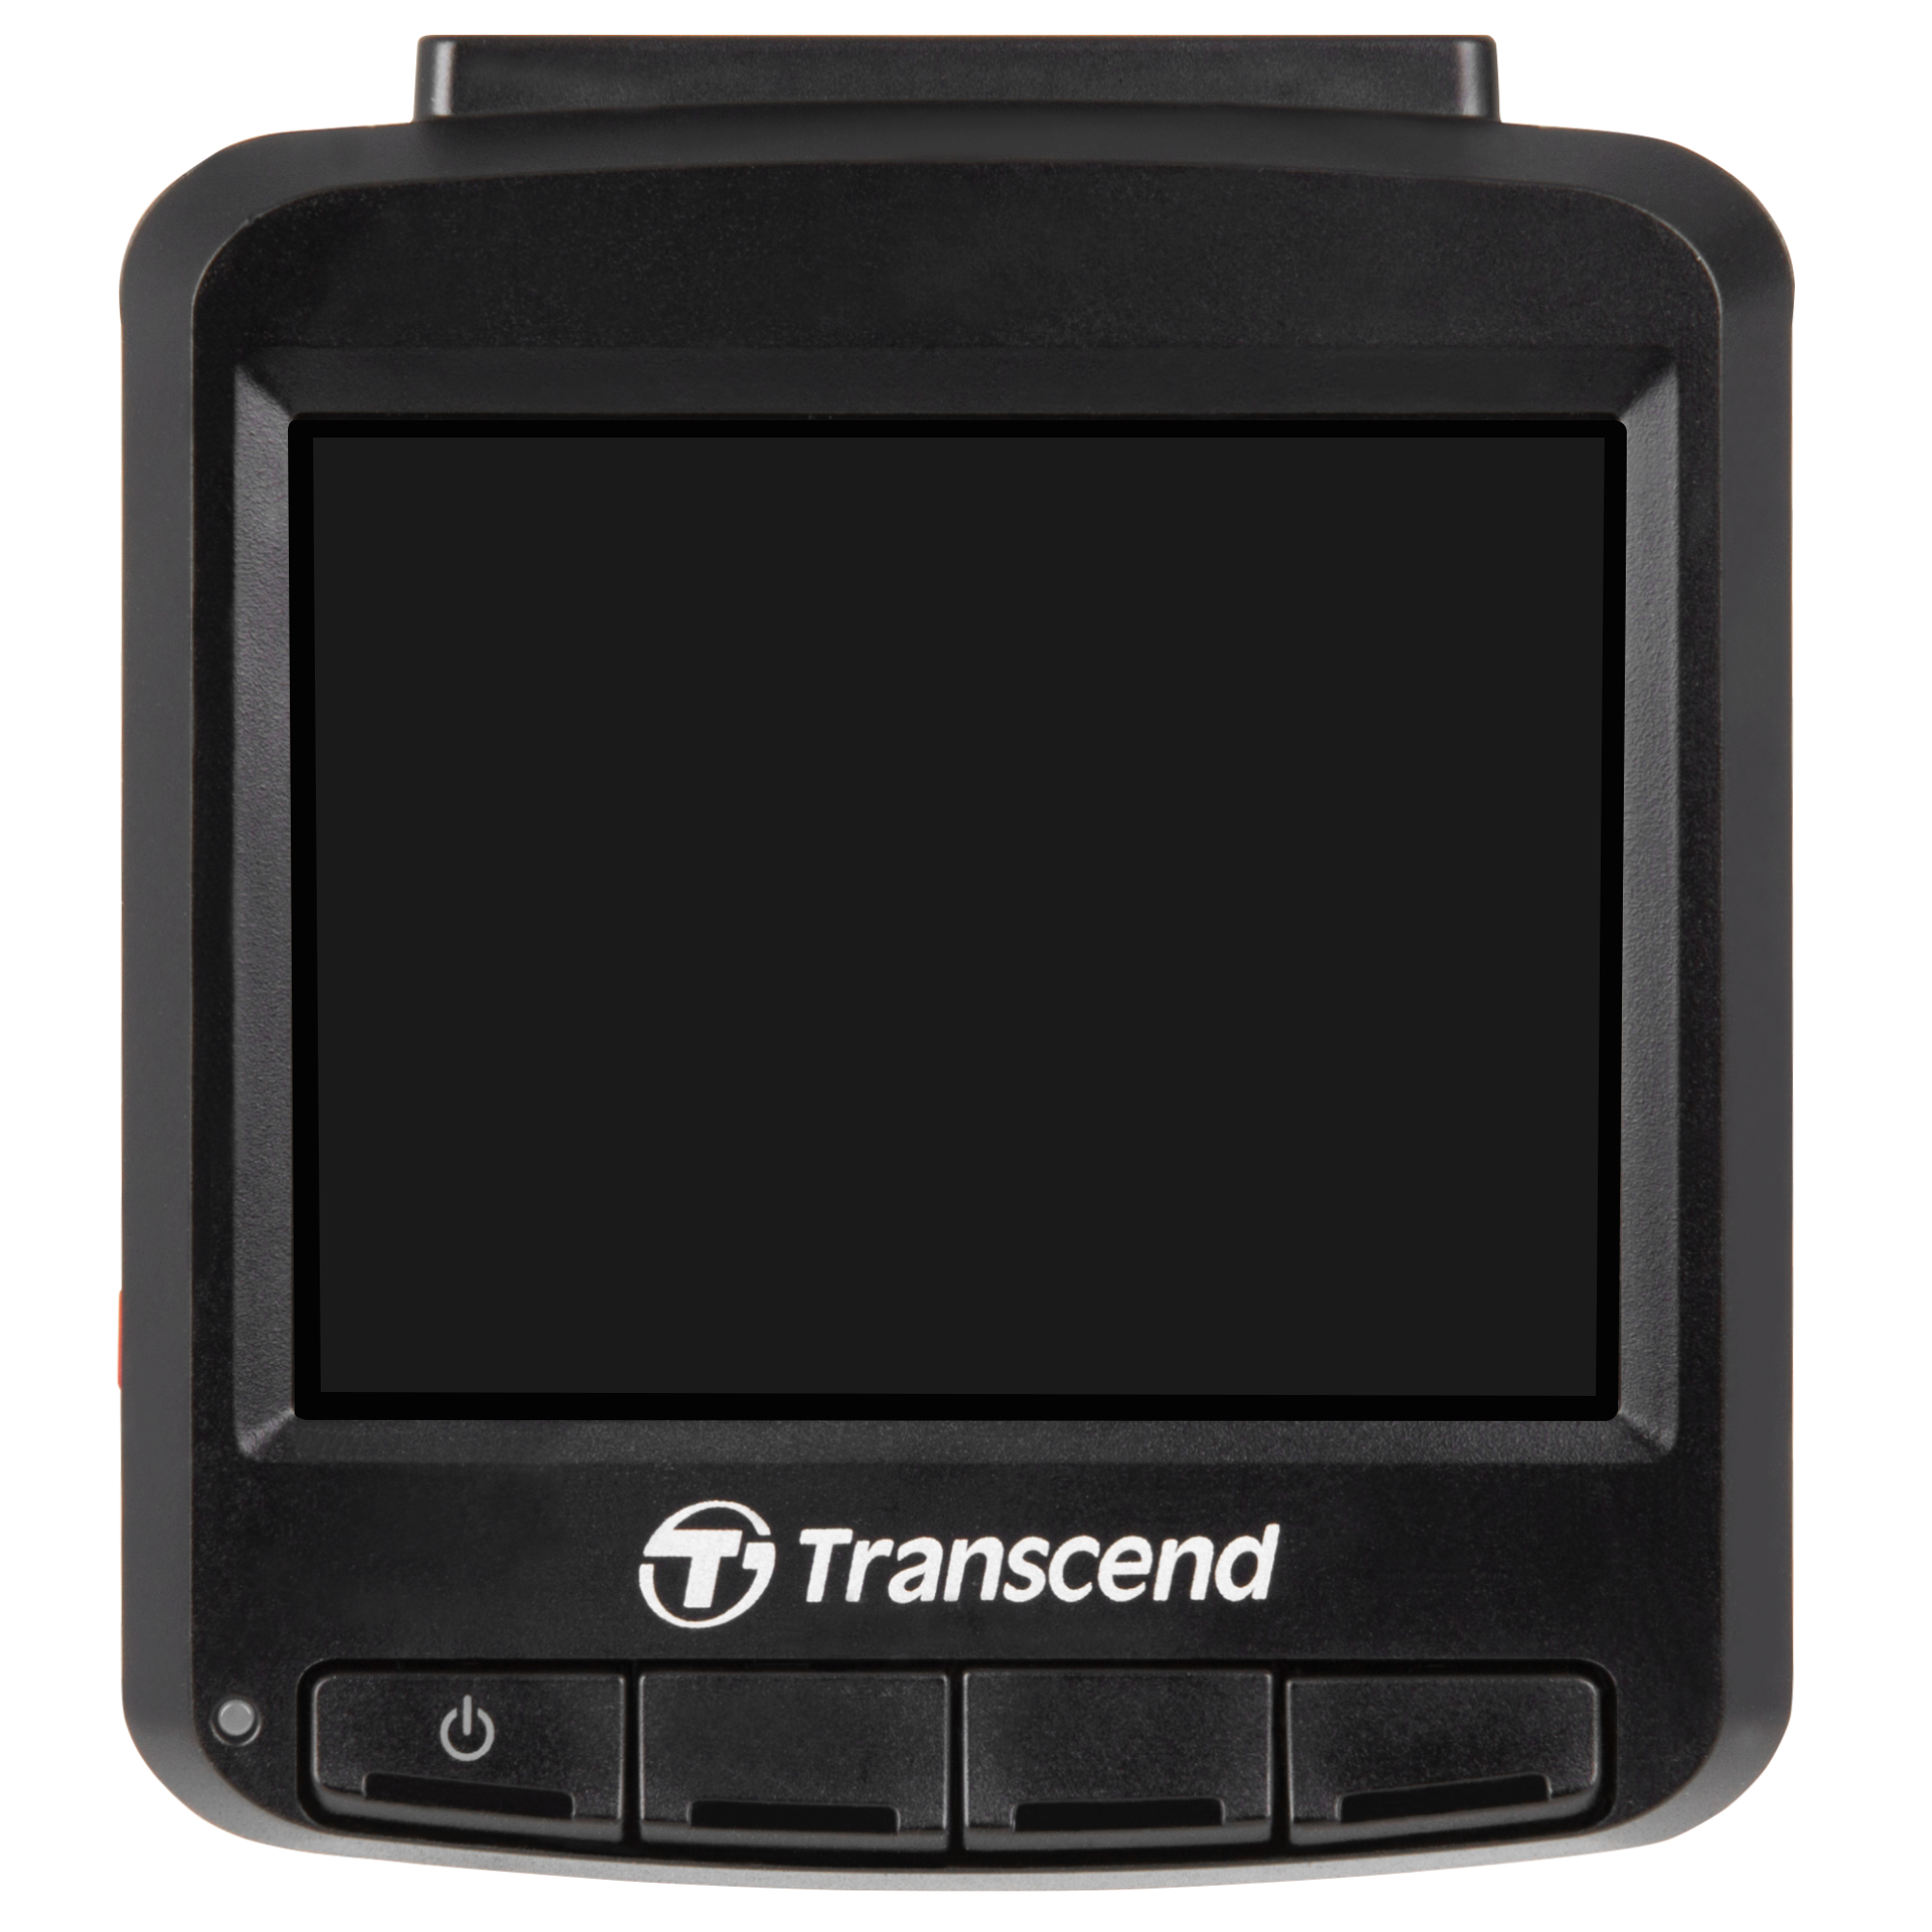 Transcend Dashcam DrivePro Dp230